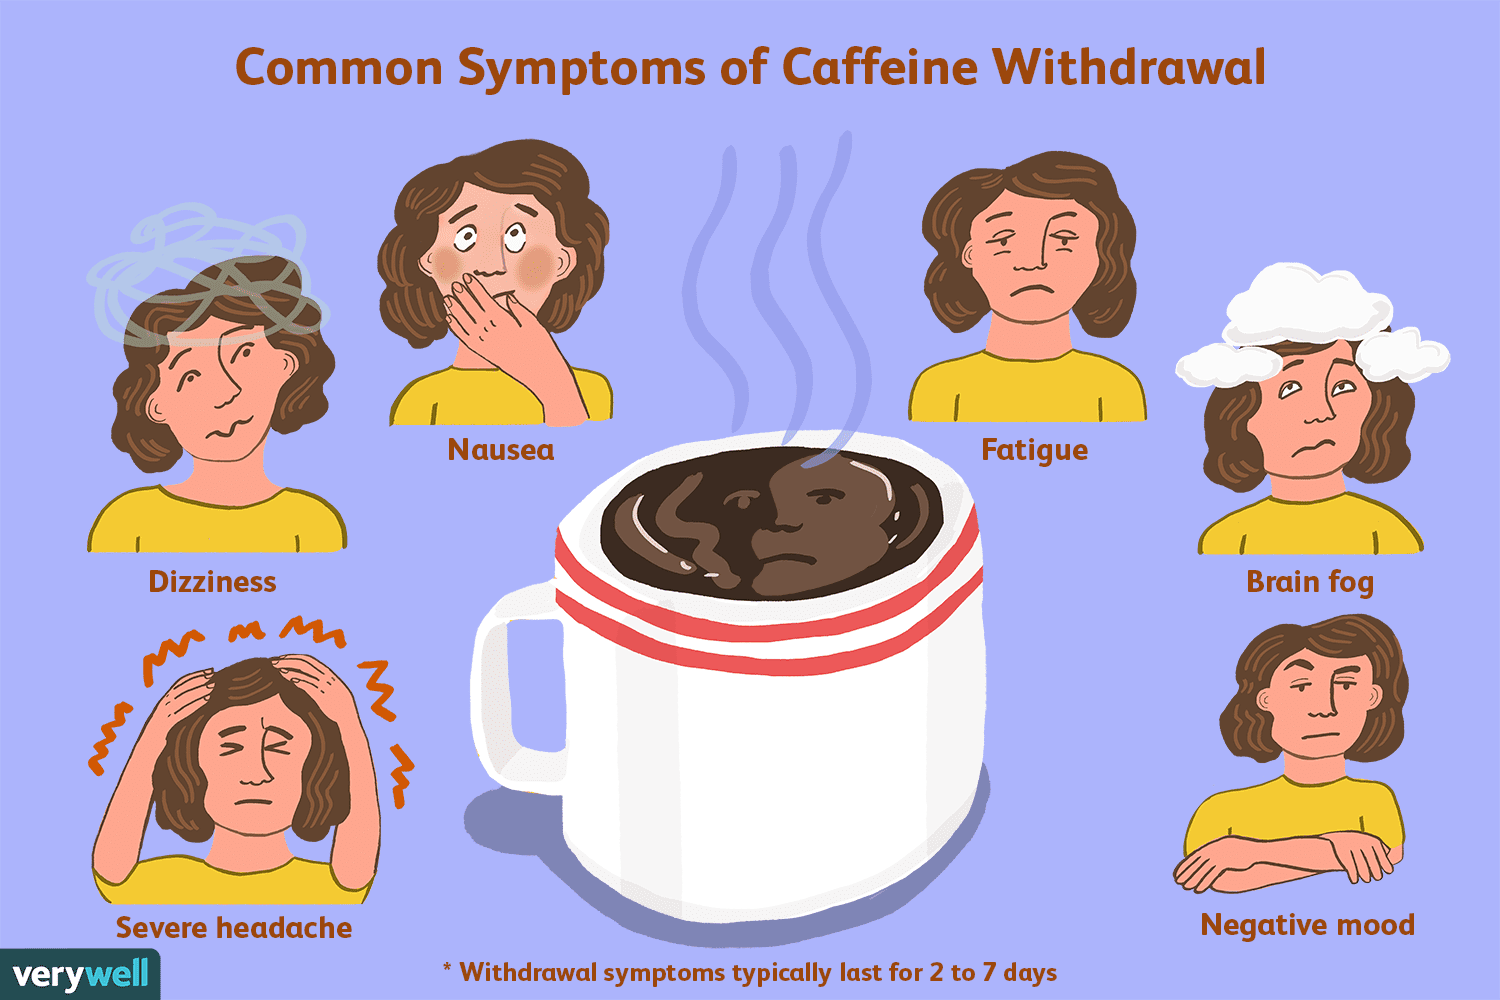 Can Caffeine Withdrawal Cause Brain Fog?